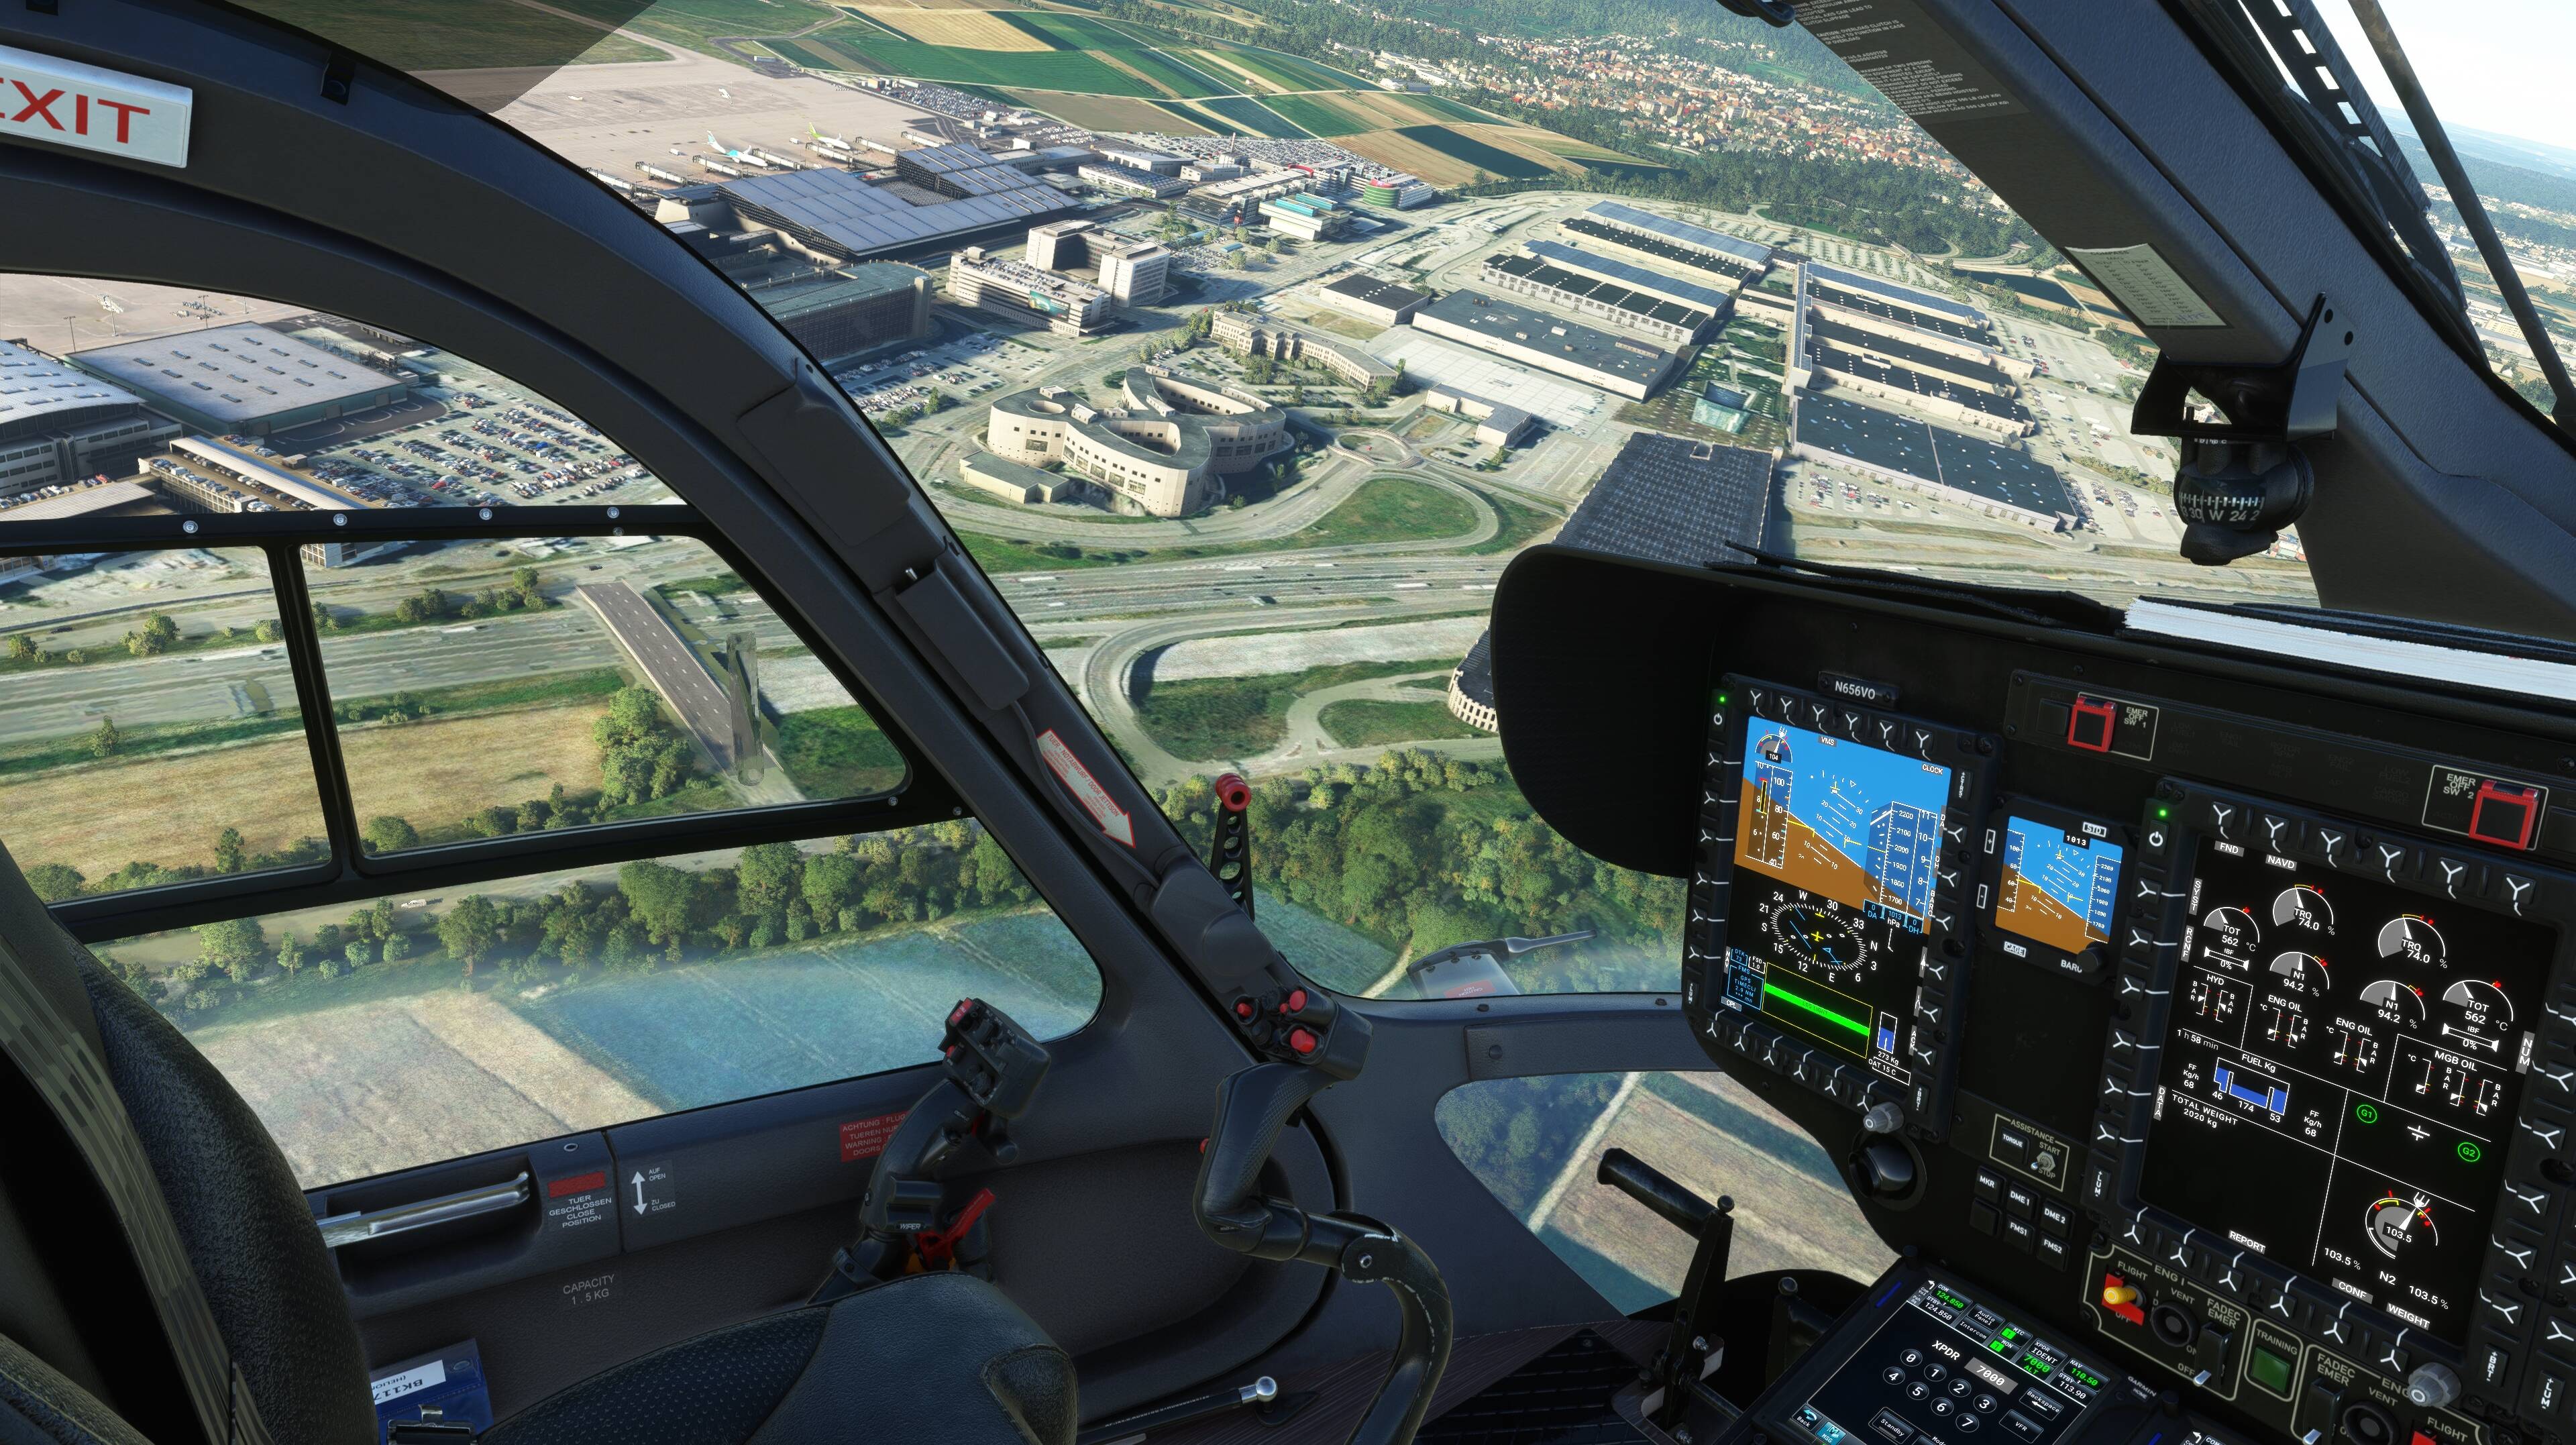 2021-09-07 23_18_15-Microsoft Flight Simulator - 1.19.8.0